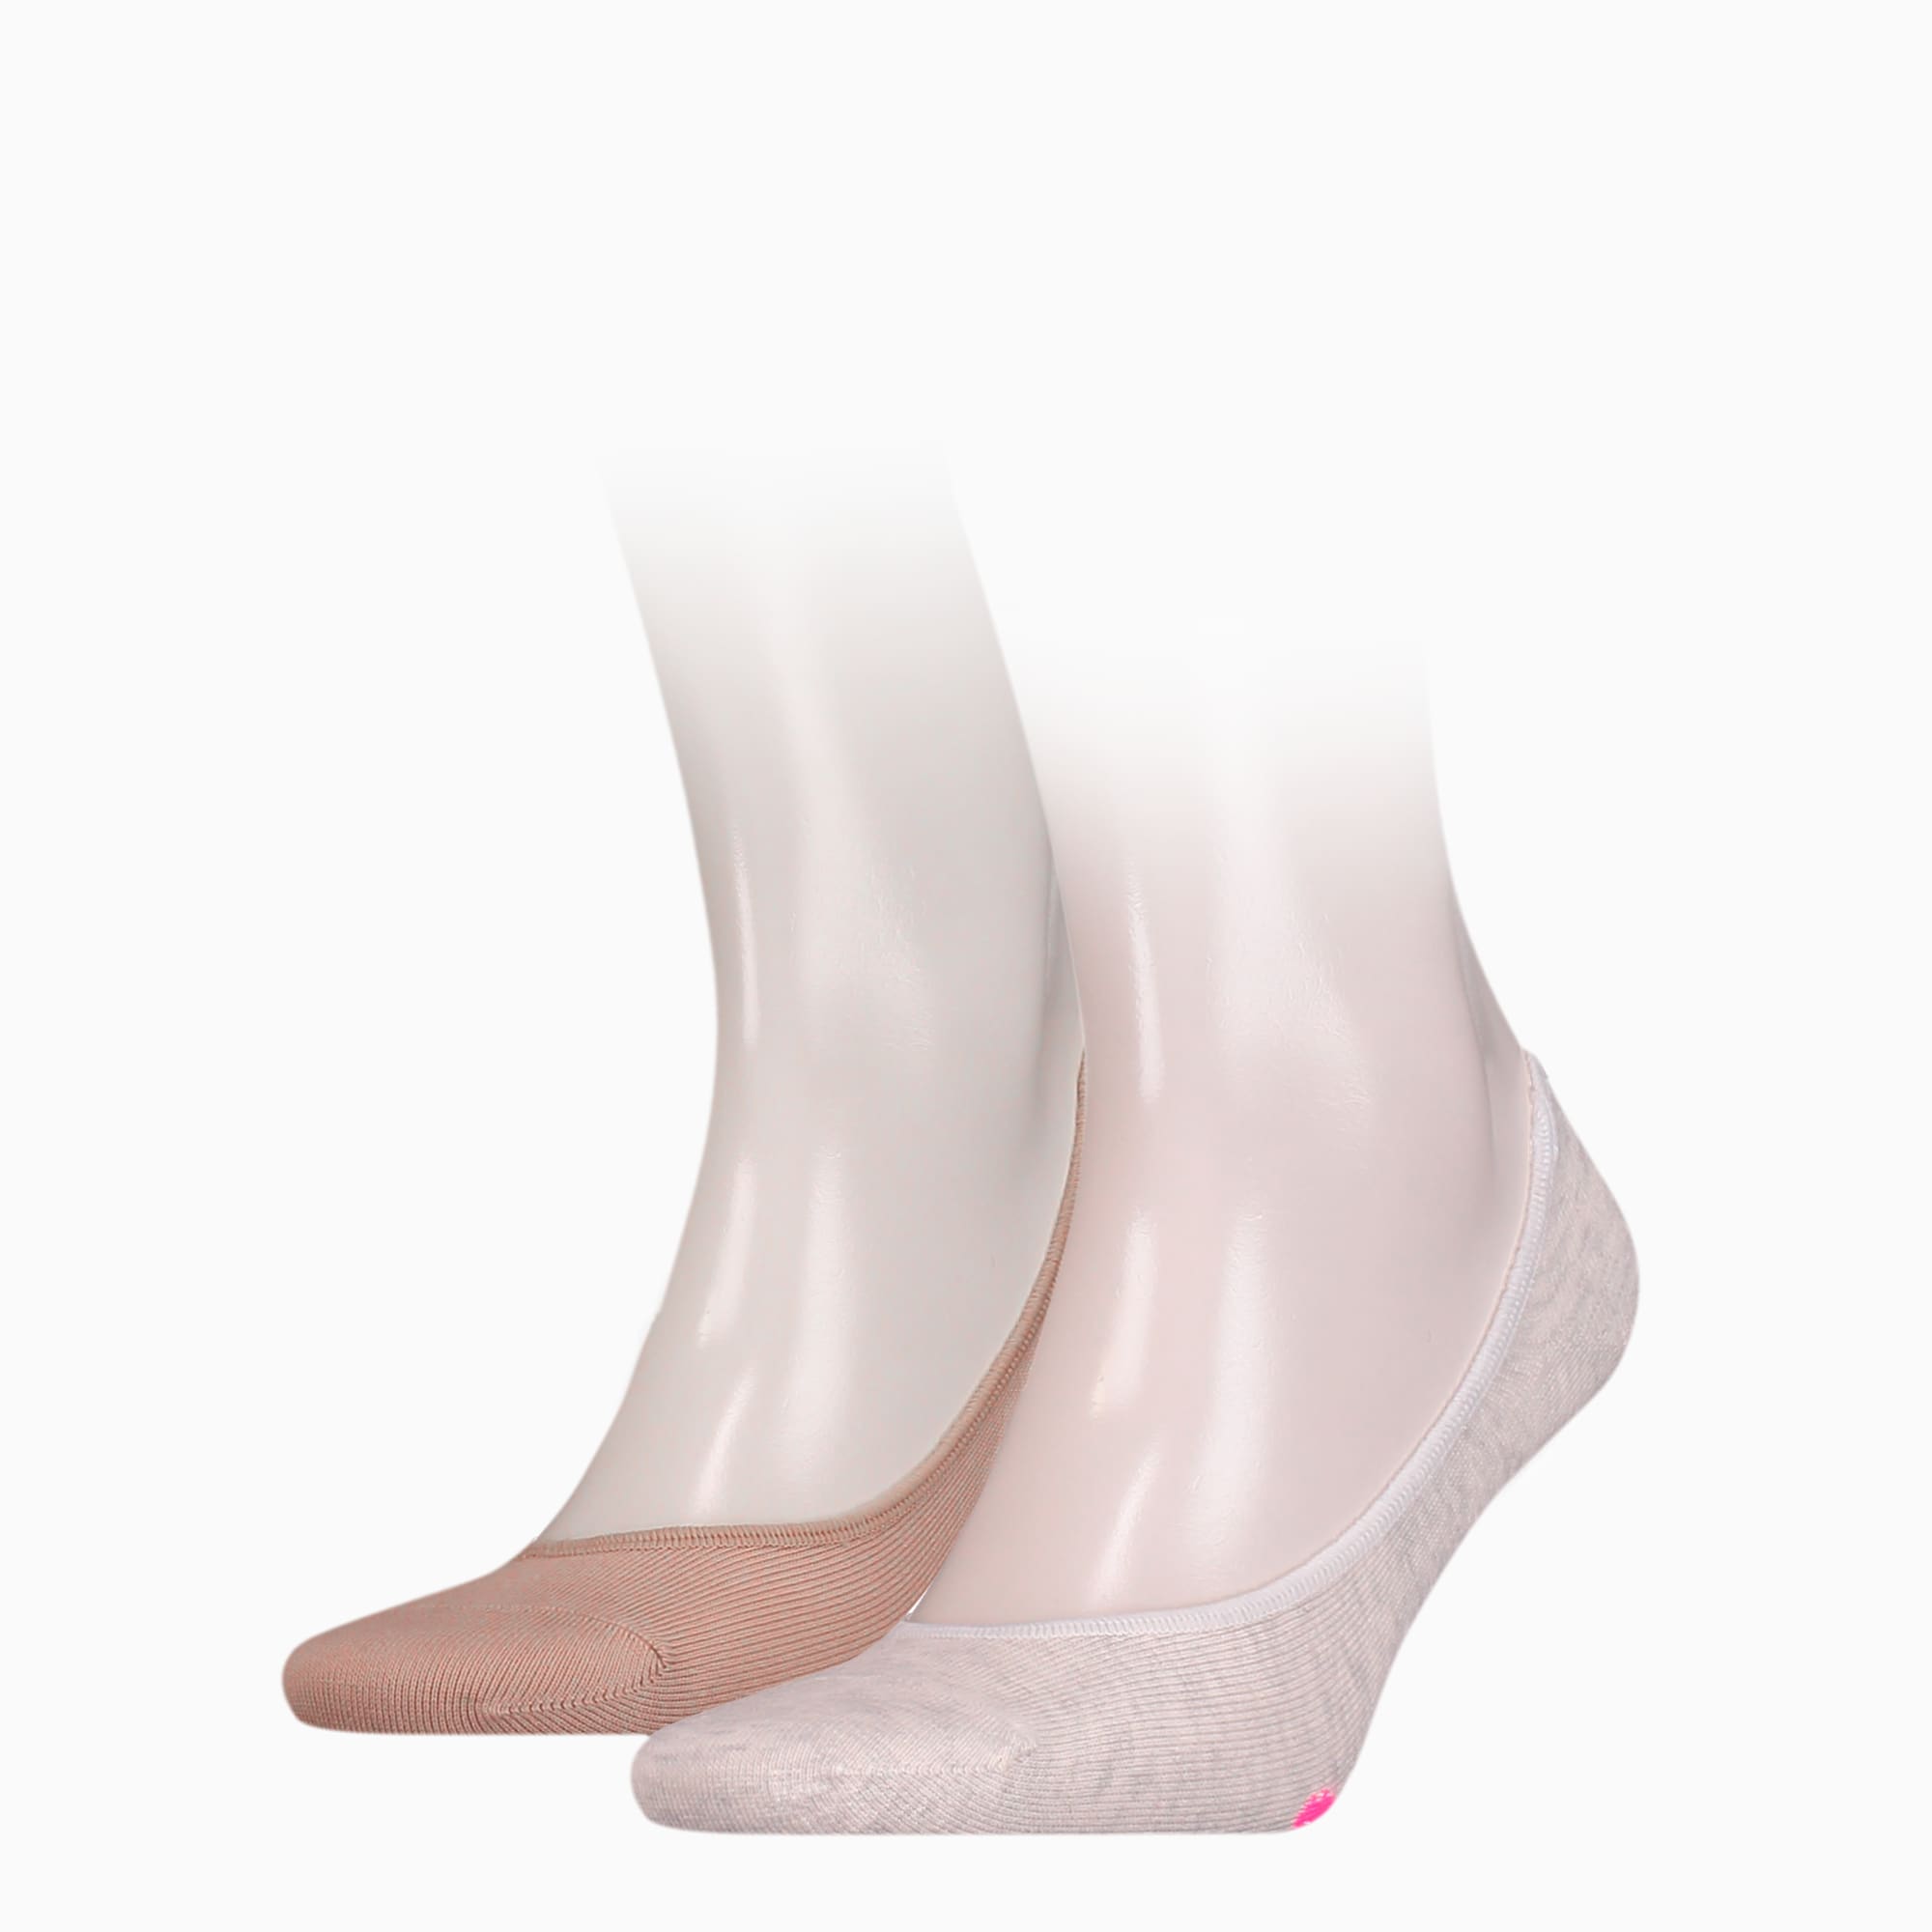 Image of PUMA Damen Unsichtbare Socken 2er Pack | Mit Aucun | Pastellrosa | Größe: 39-42